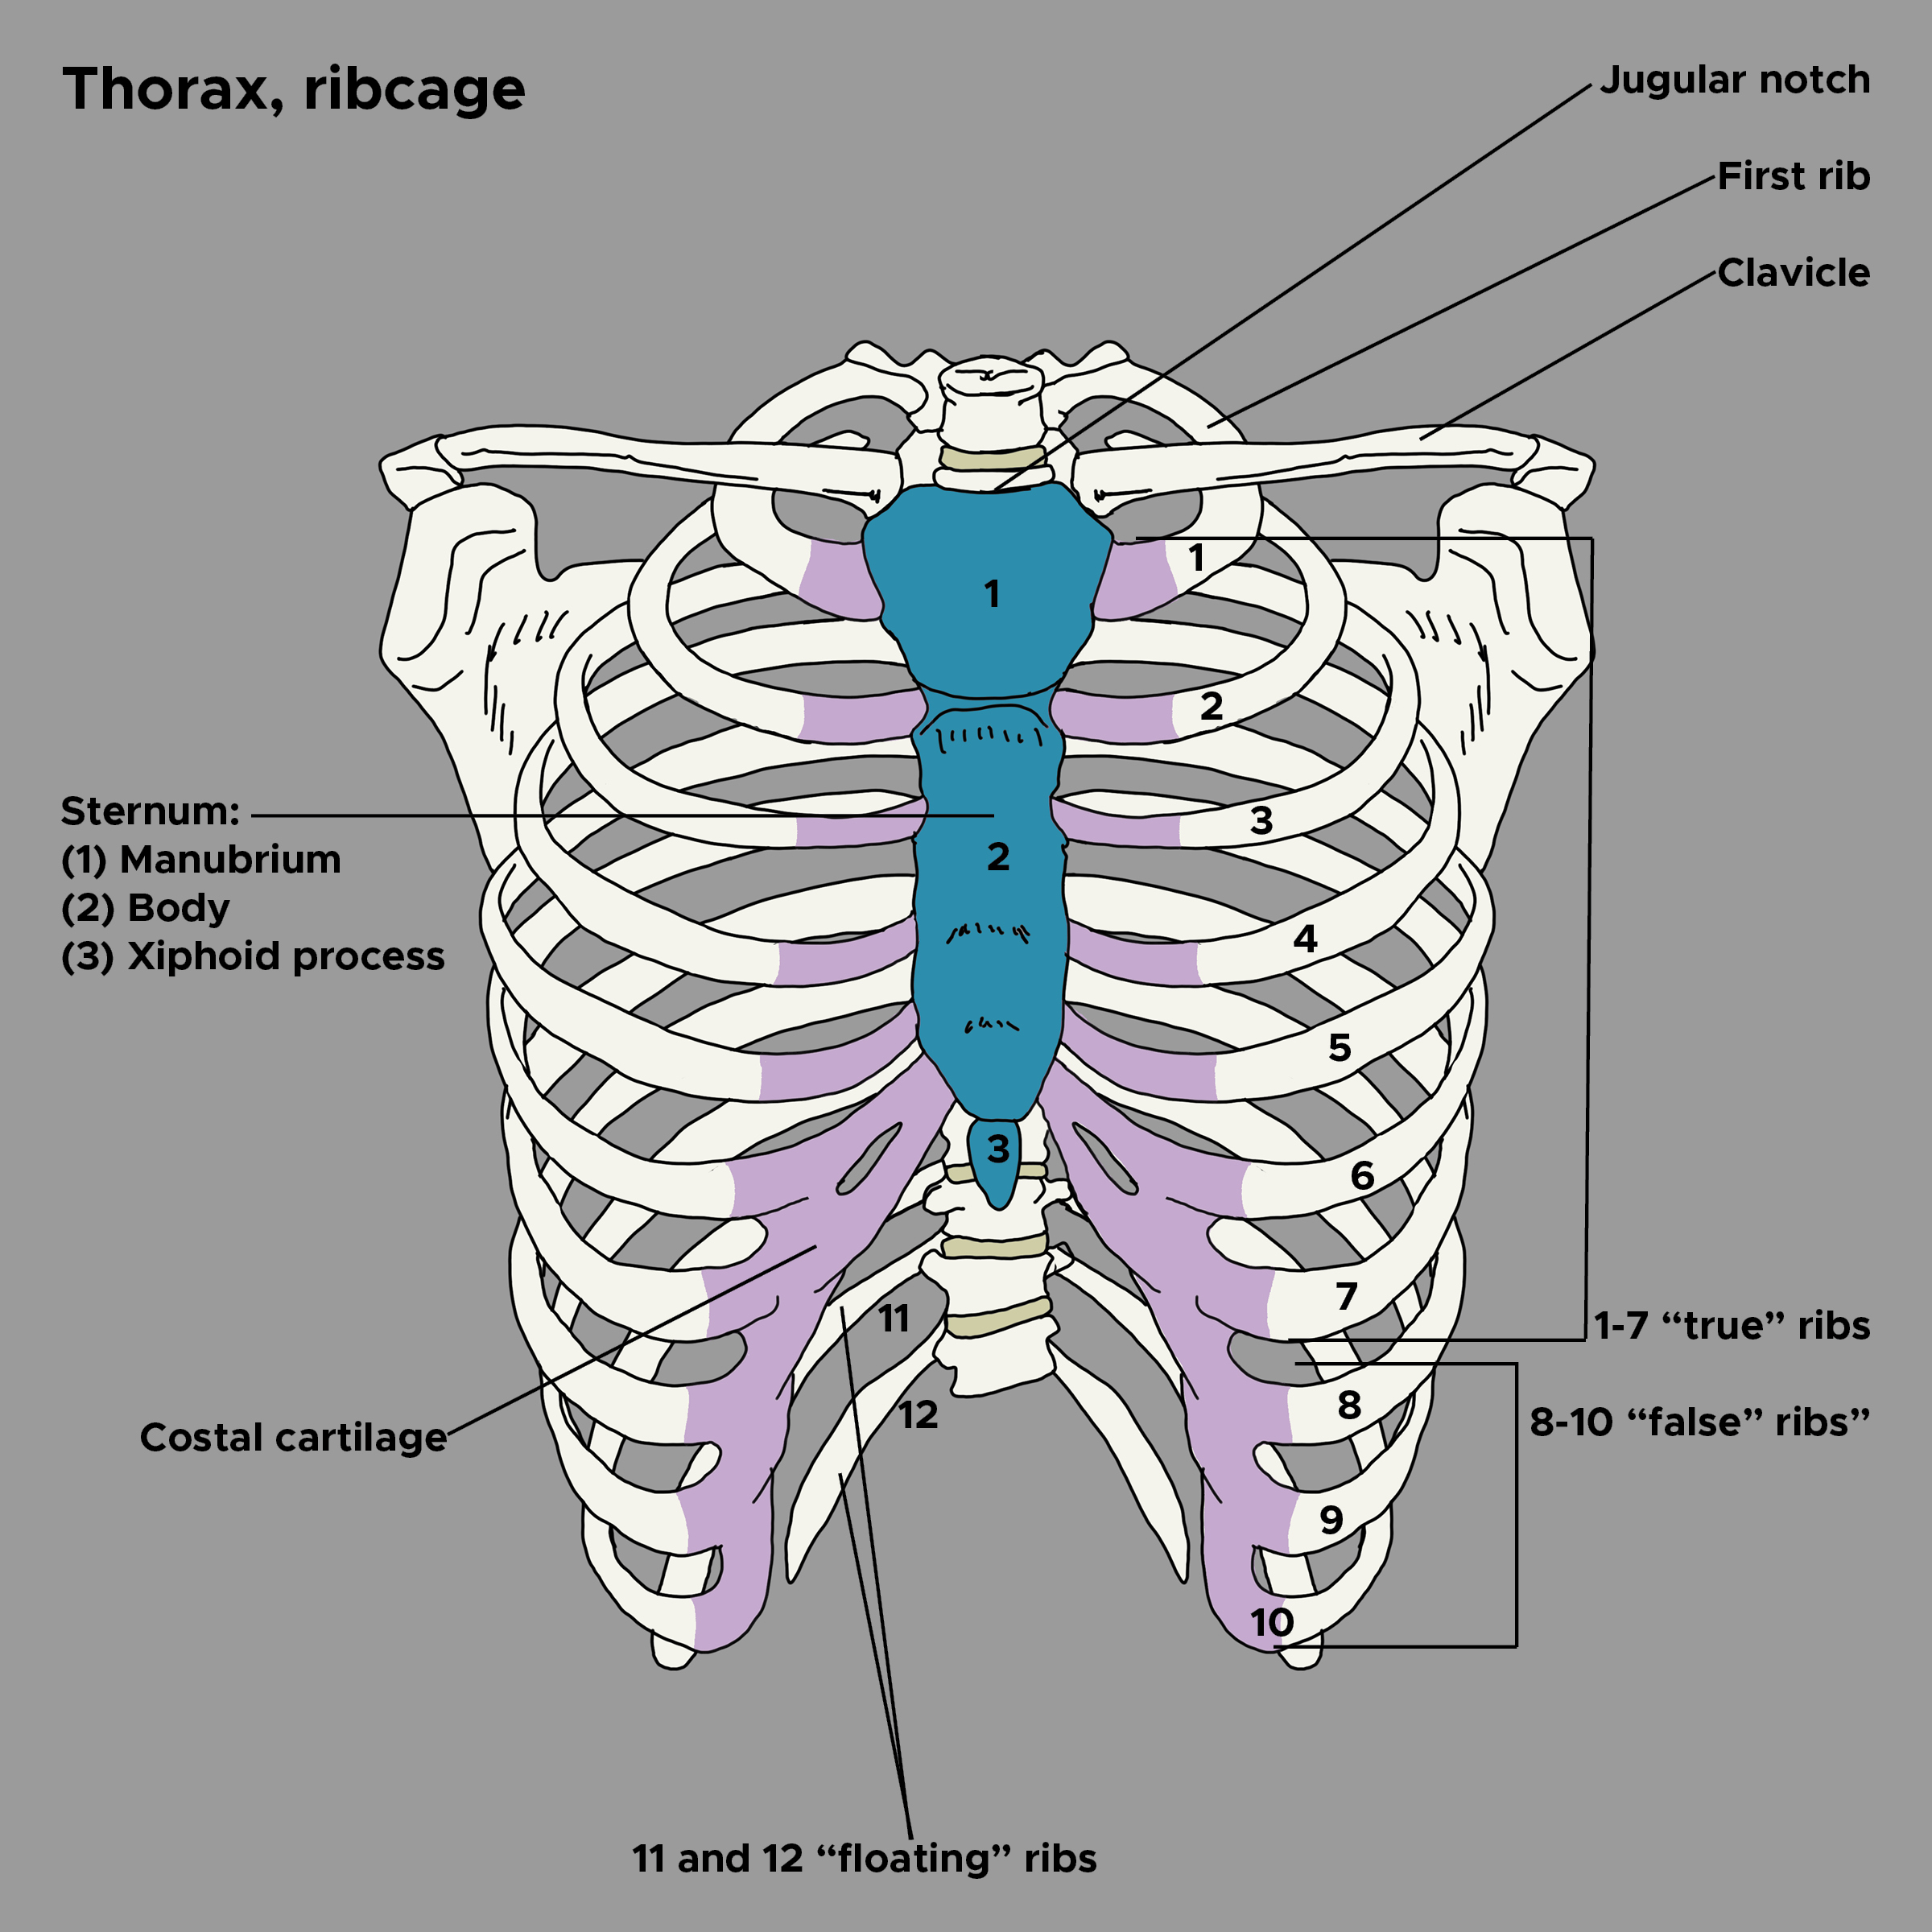 Illustration of bones, cartilage of thorax